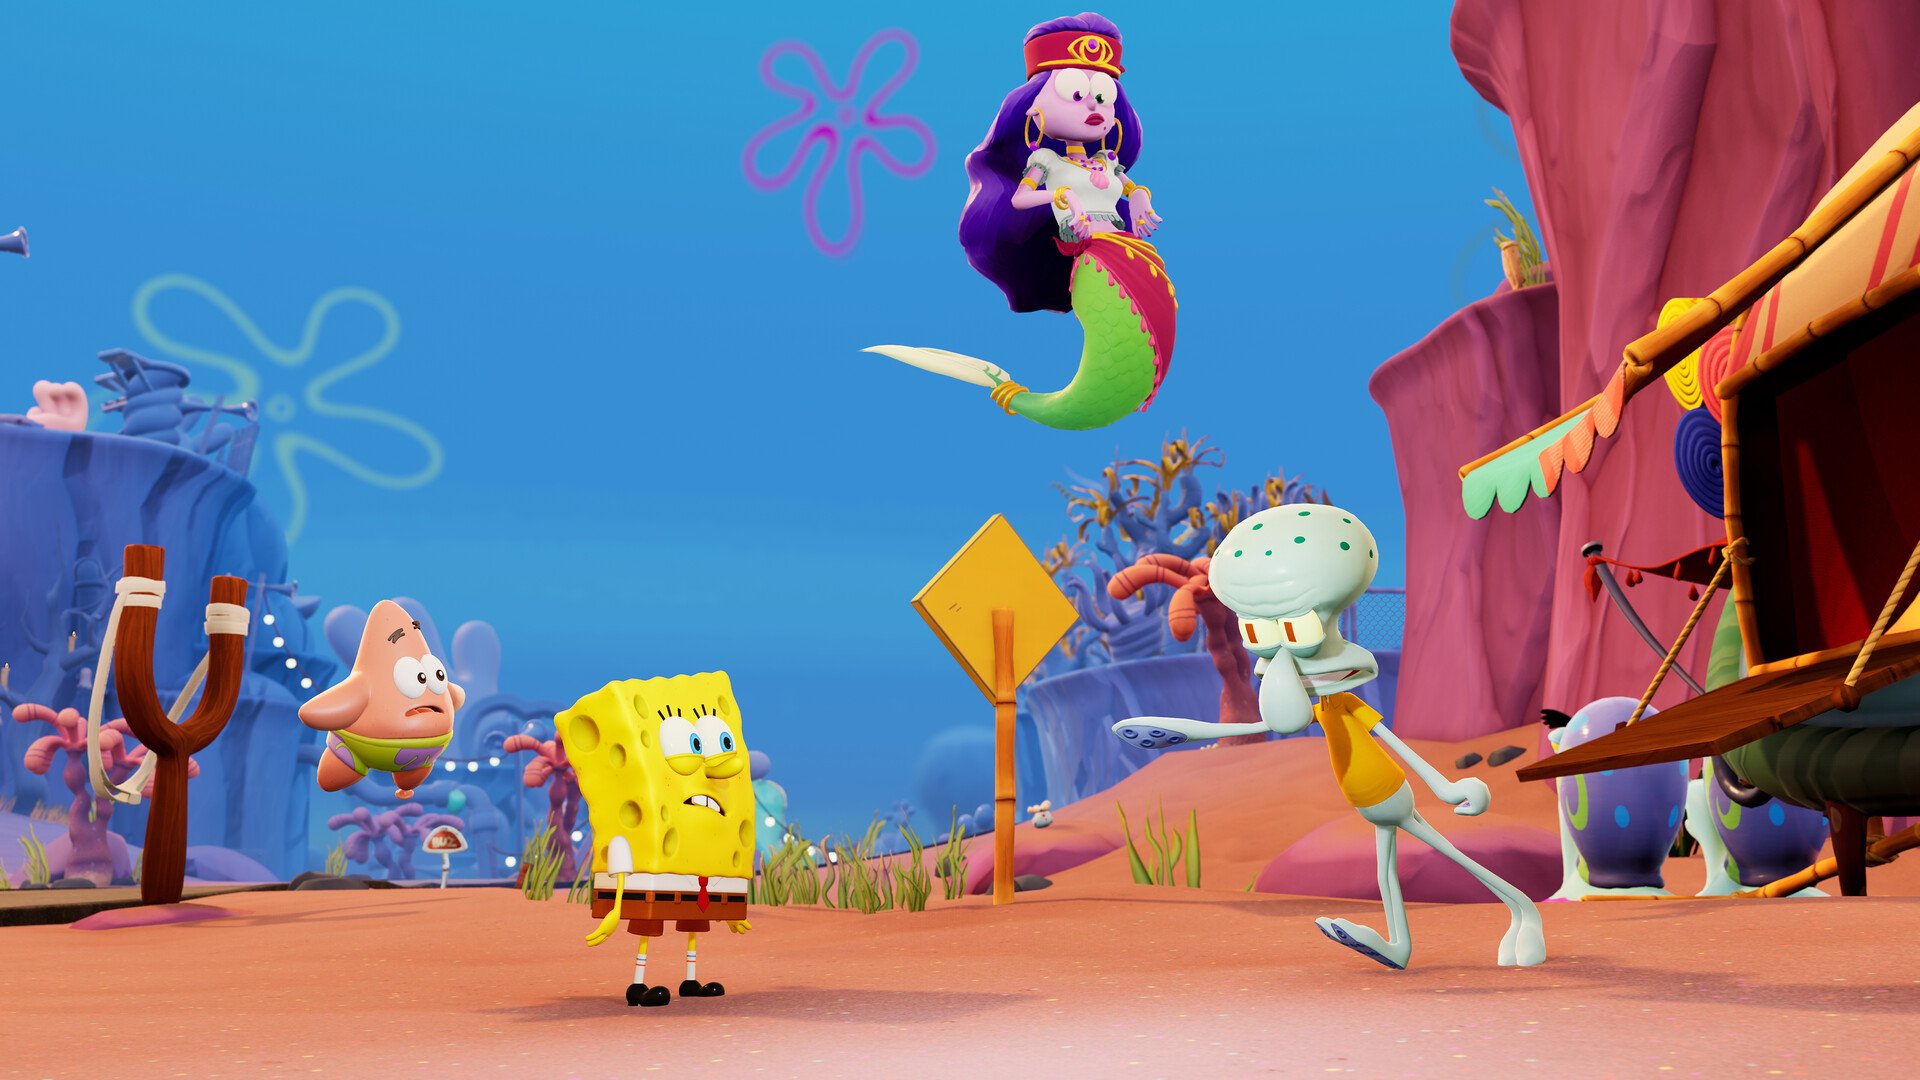 SpongeBob SquarePants The Cosmic Shake 1